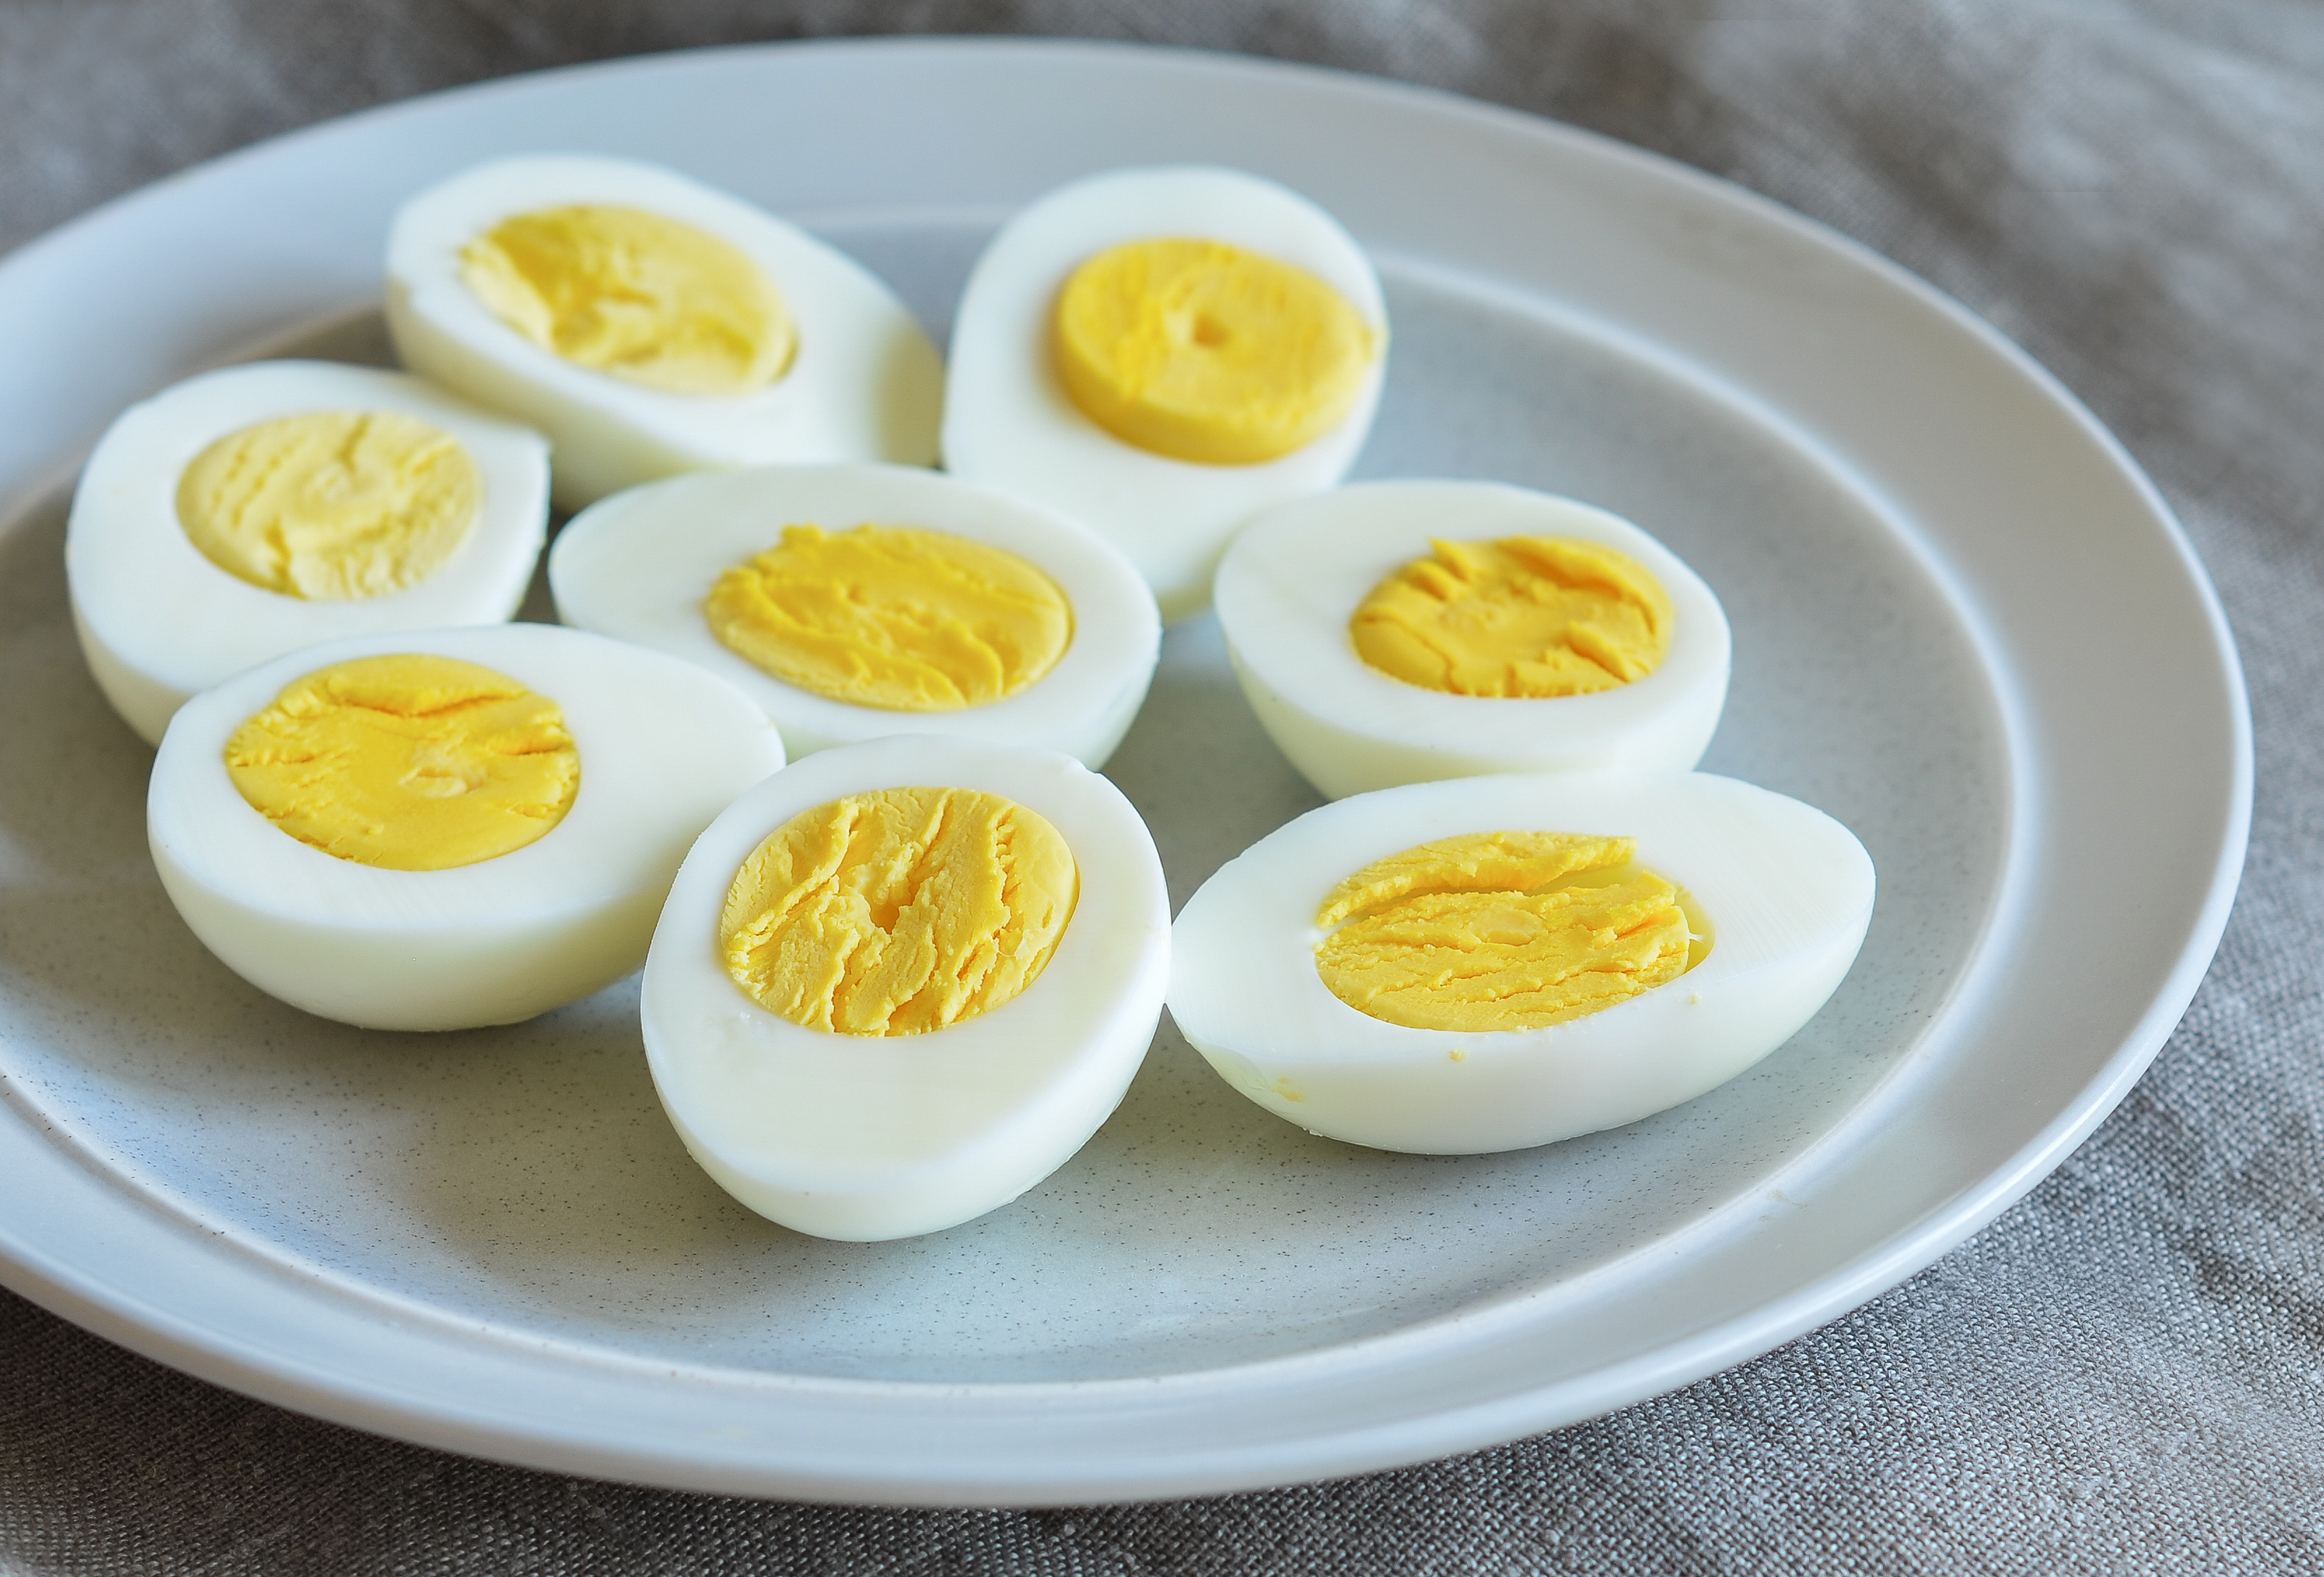 https://www.onceuponachef.com/images/2017/10/How-To-Make-Hard-Boiled-Eggs.jpg